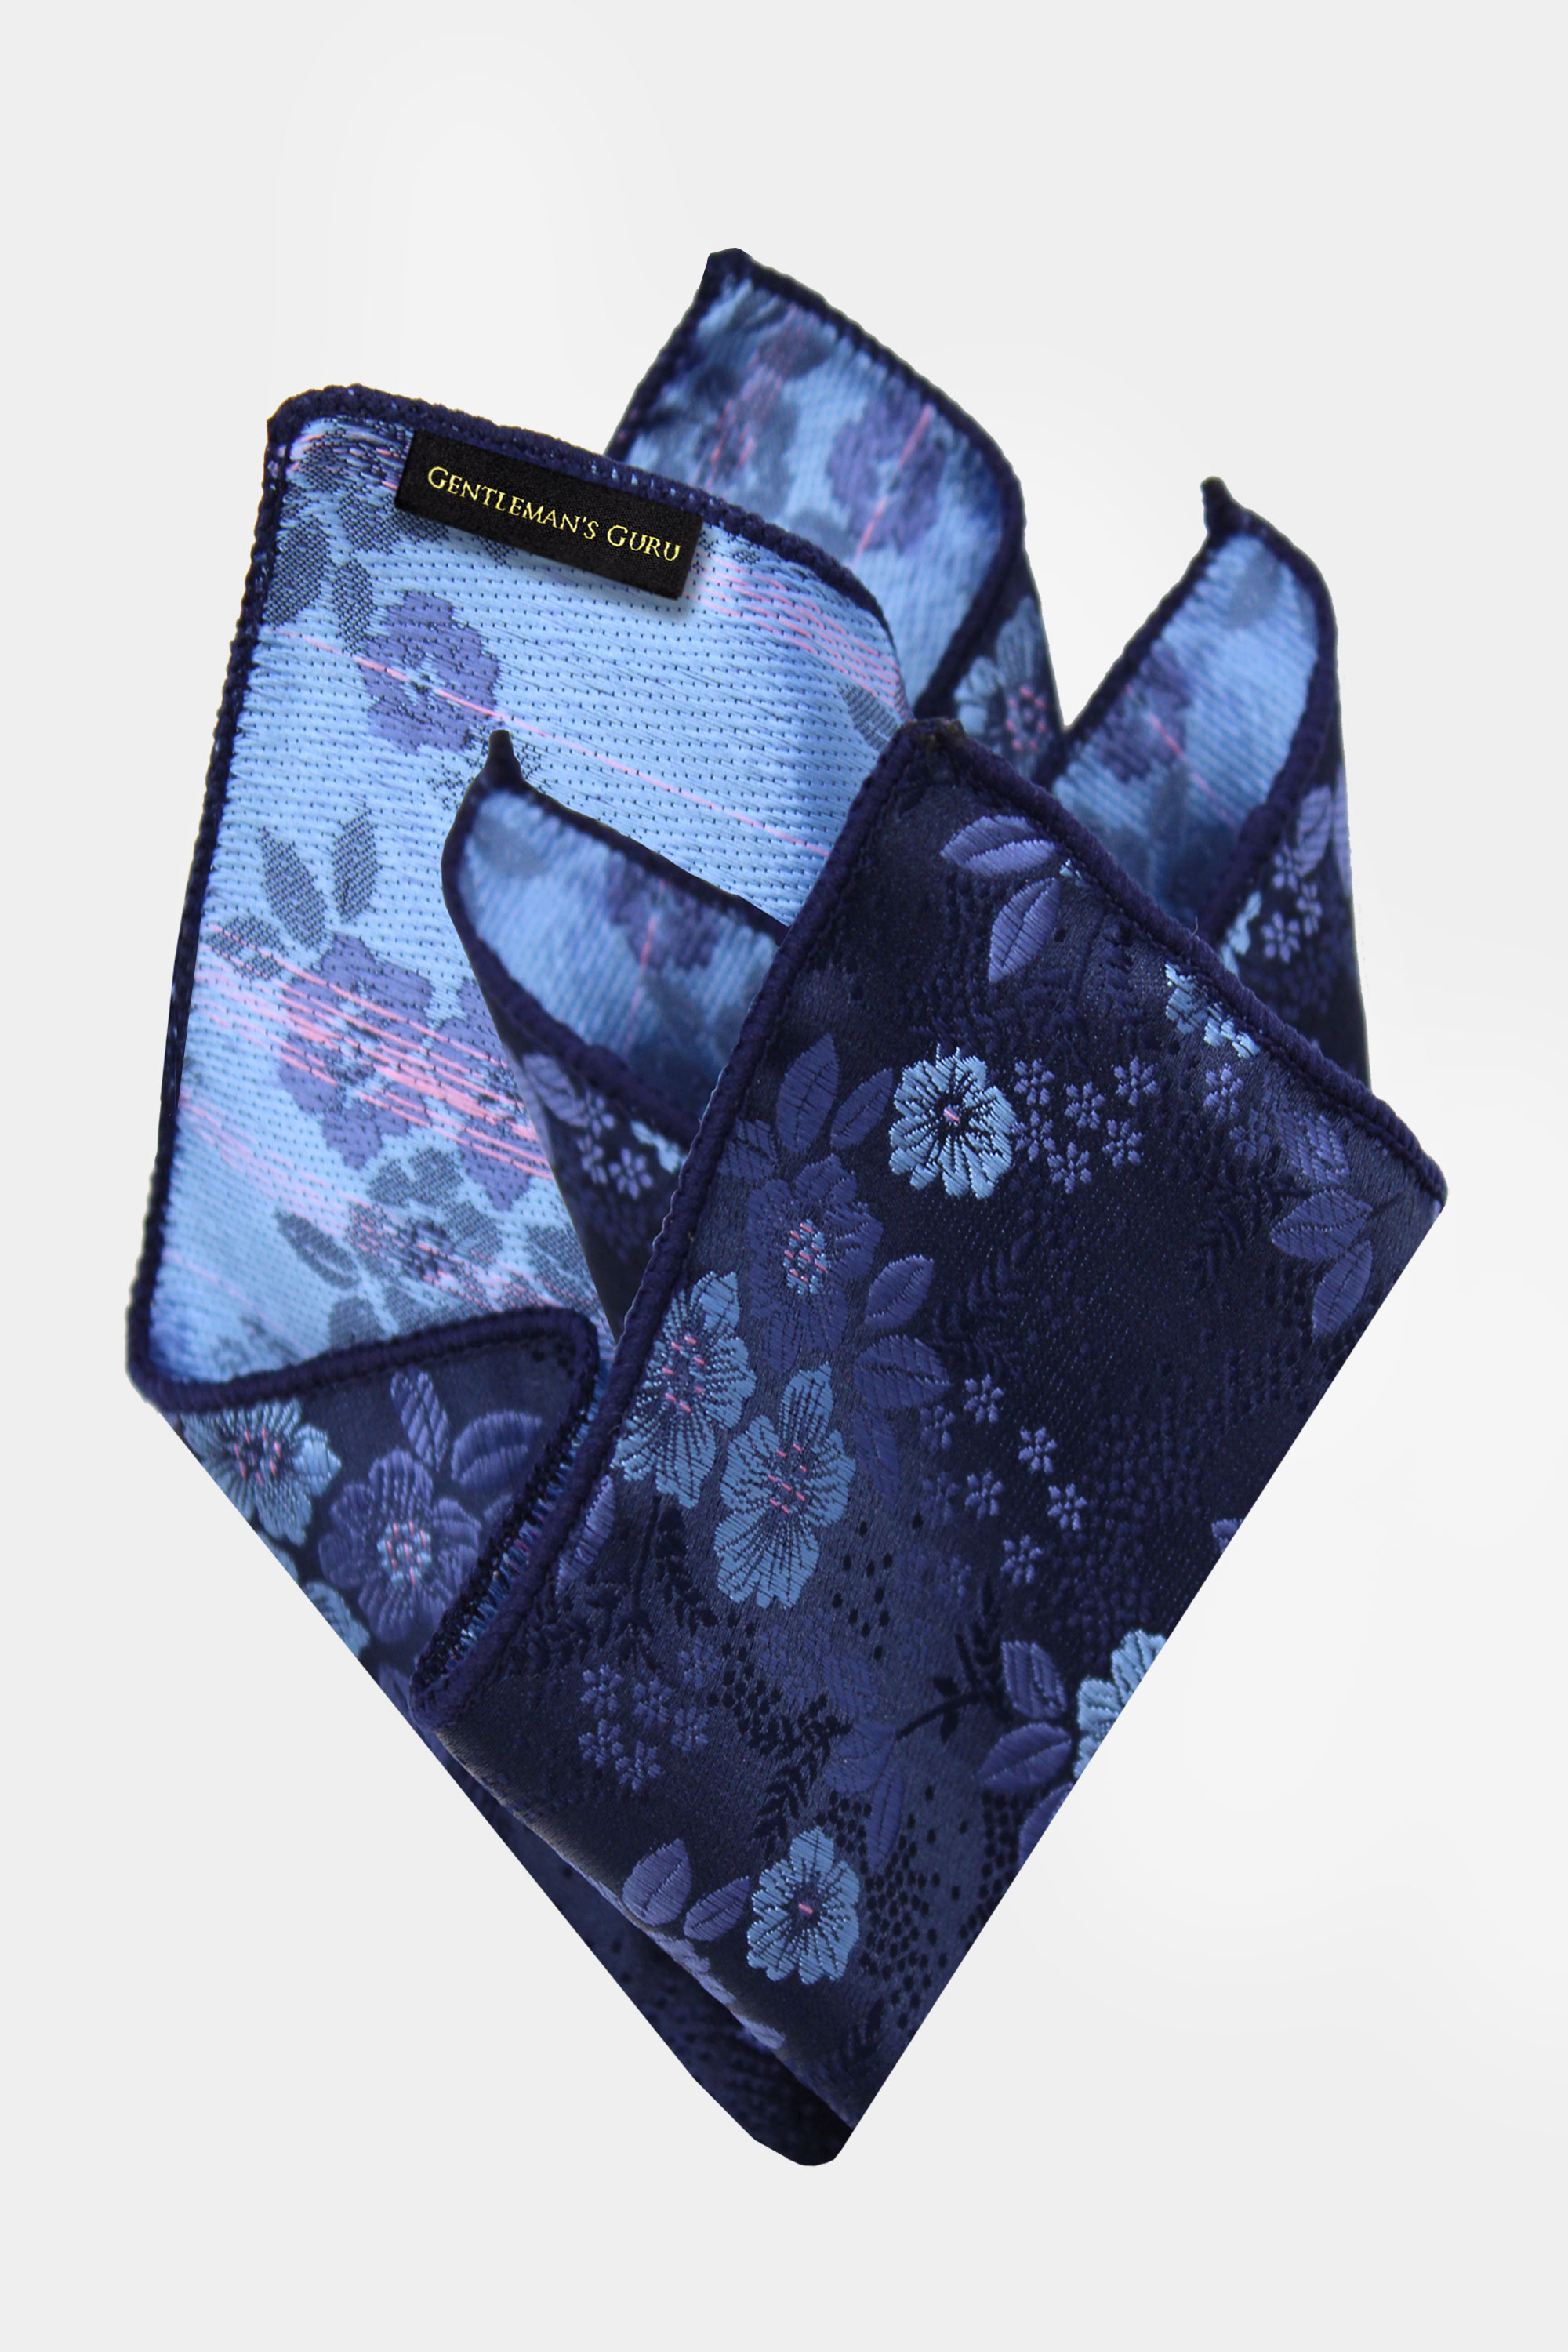 Blue-Floral-Pocket-Square-Handkerchief-from-Gentlemansguru.com